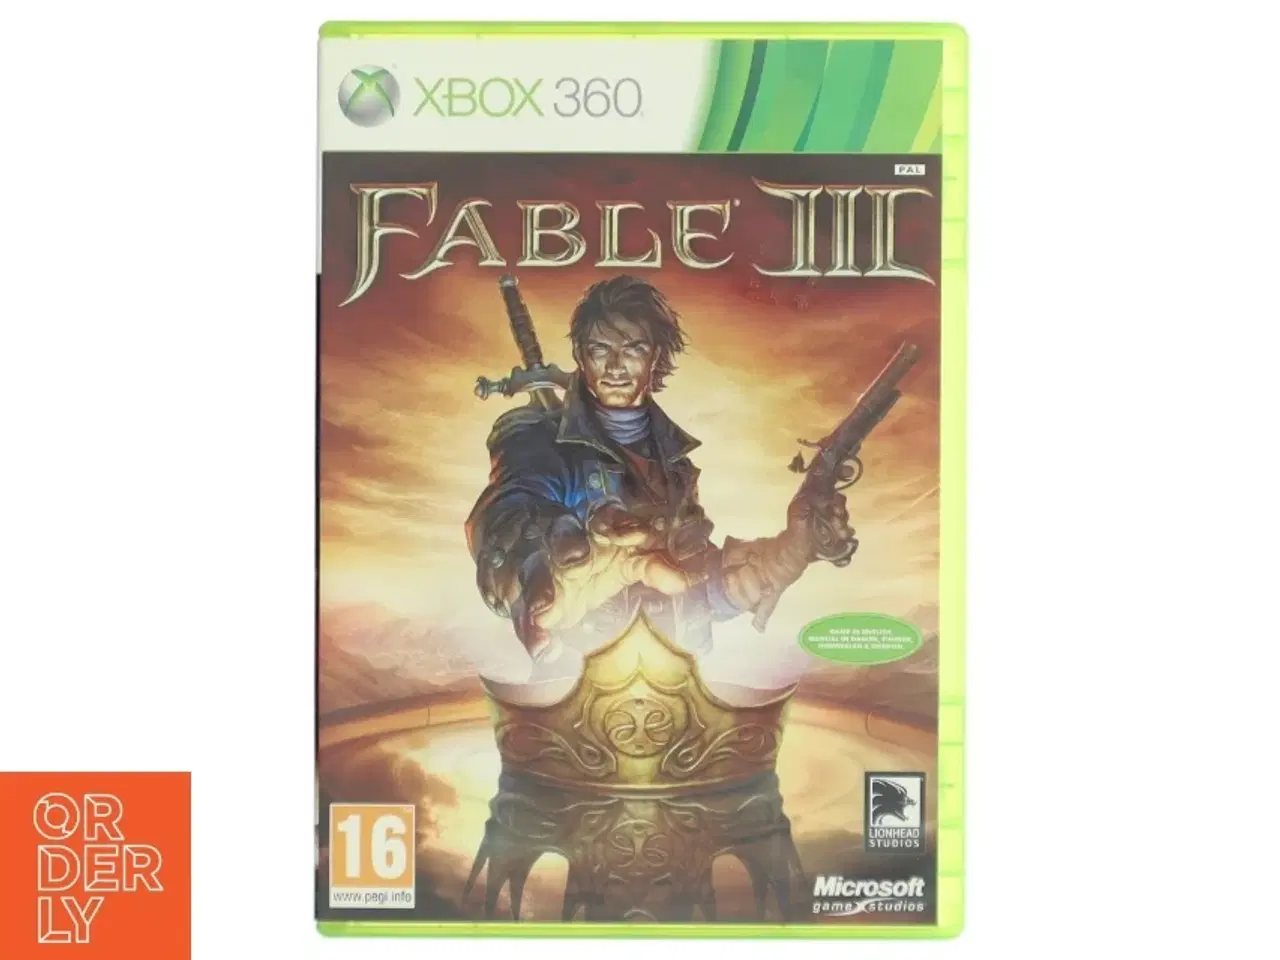 Billede 1 - Fable III Xbox 360 spil fra Microsoft